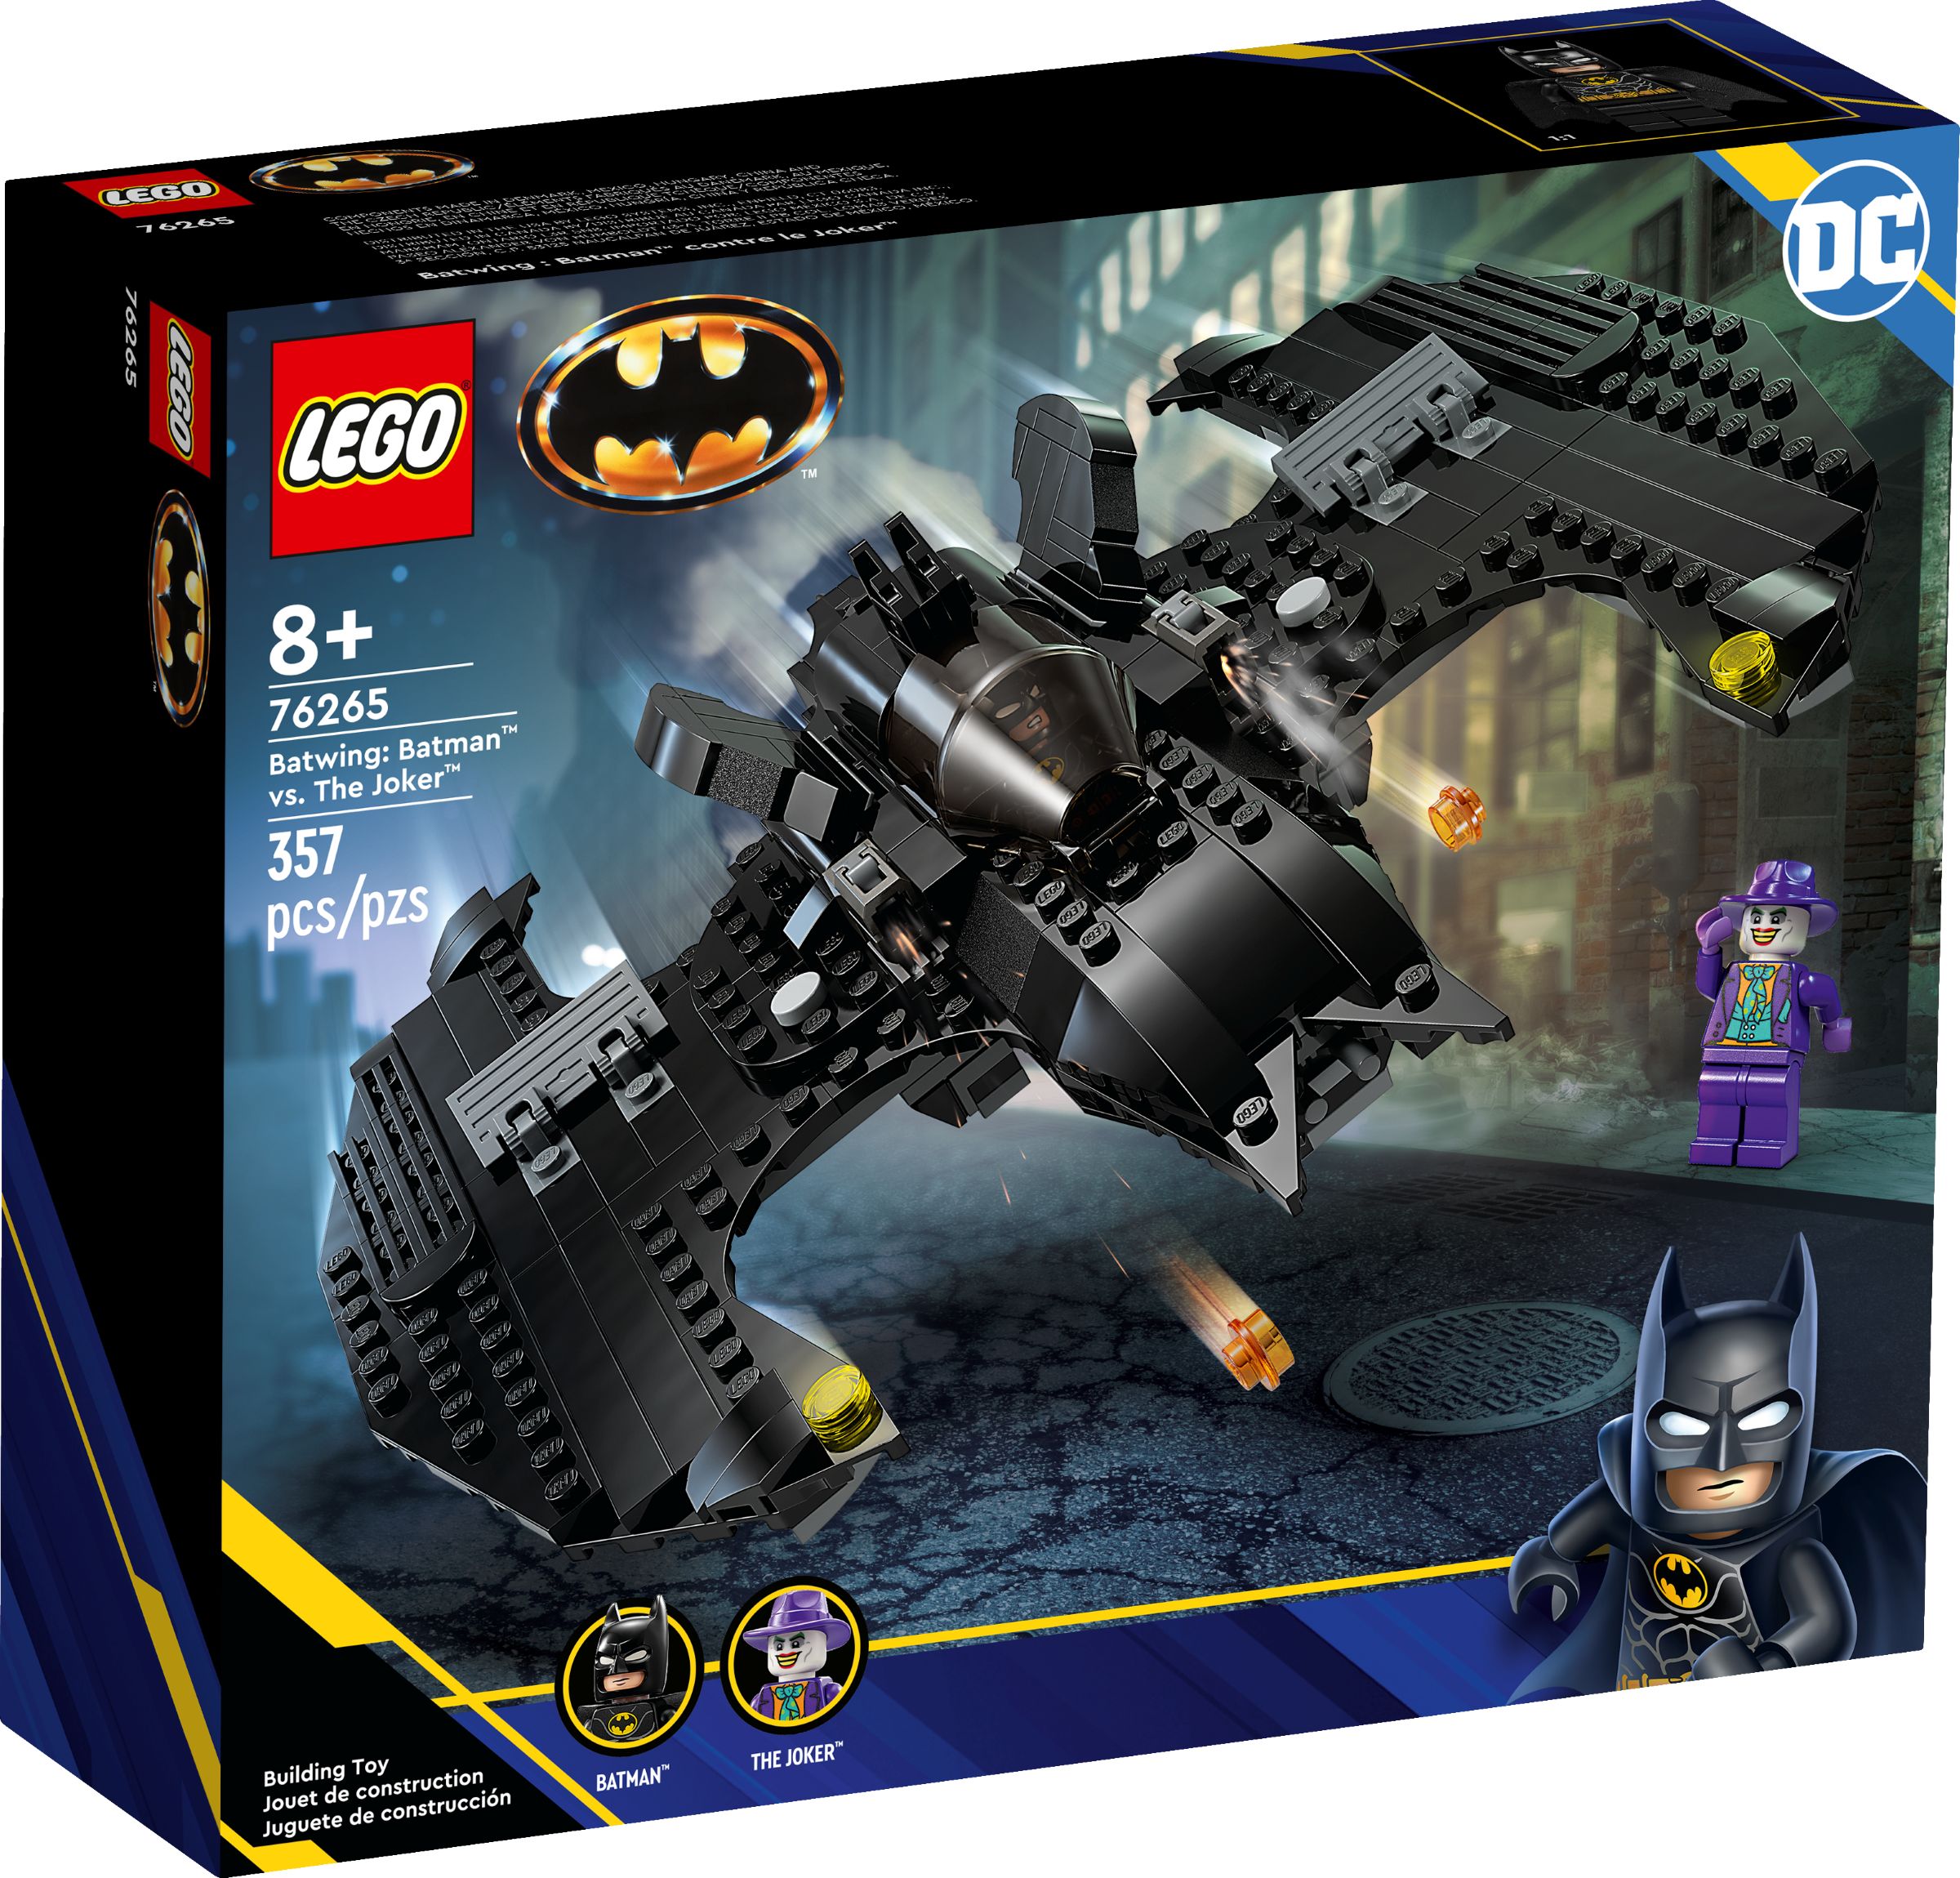 LEGO Super Heroes 76265 Batwing: Batman™ vs. Joker™ LEGO_76265_alt1.jpg